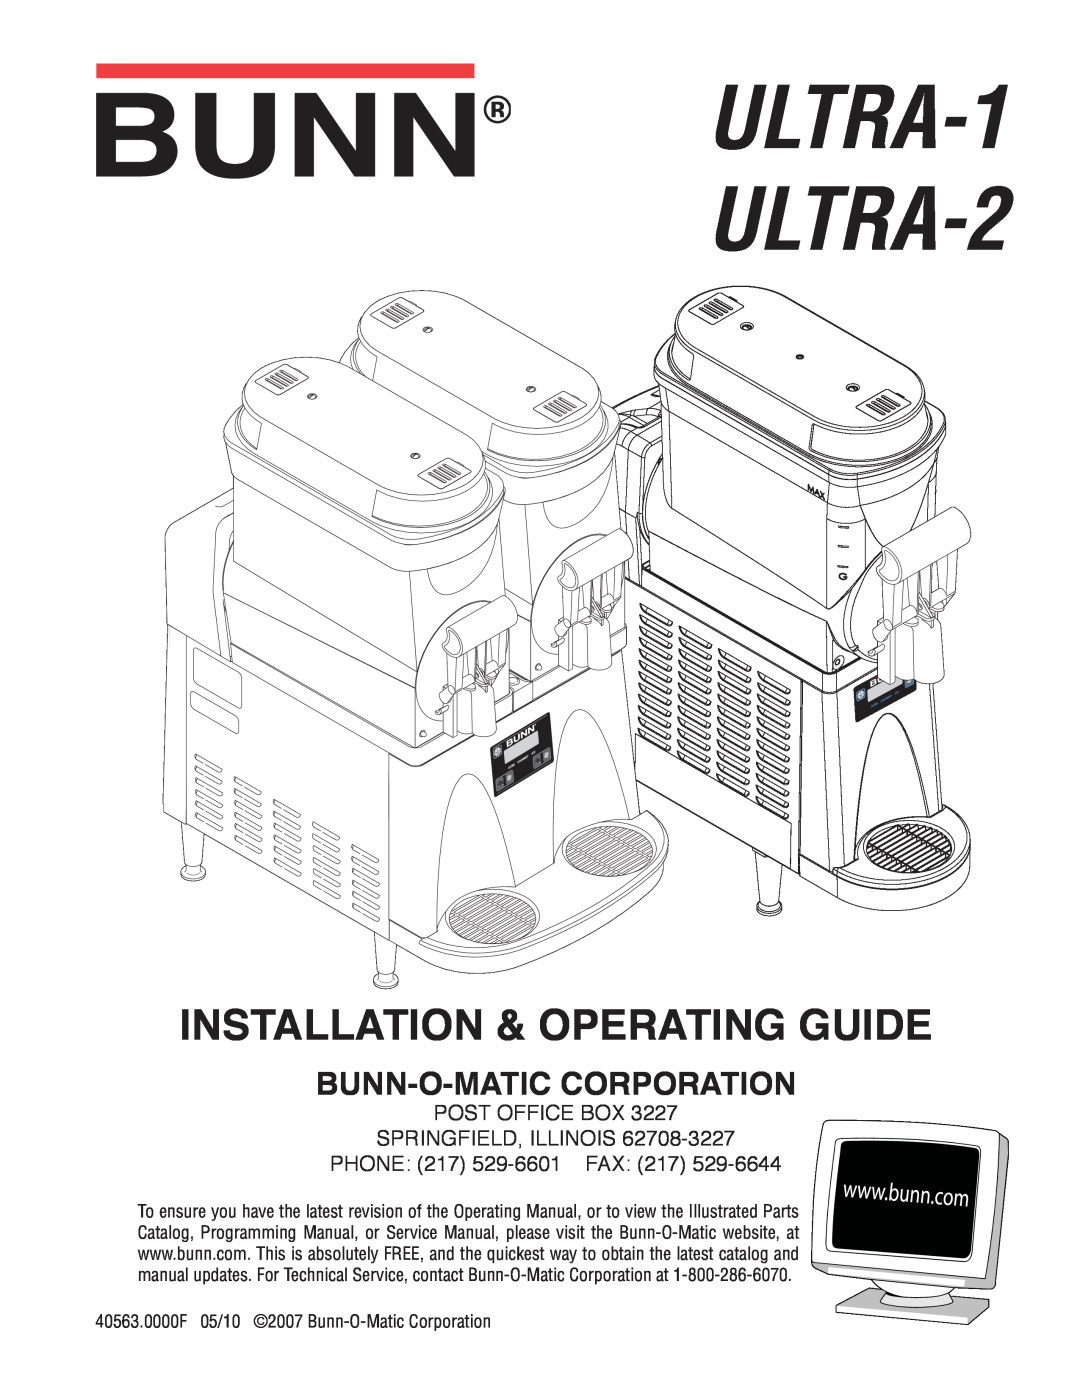 Bunn Ultra 2 service manual ULTRA-1 ULTRA-2, Installation & Operating Guide, Bunn-O-Maticcorporation 